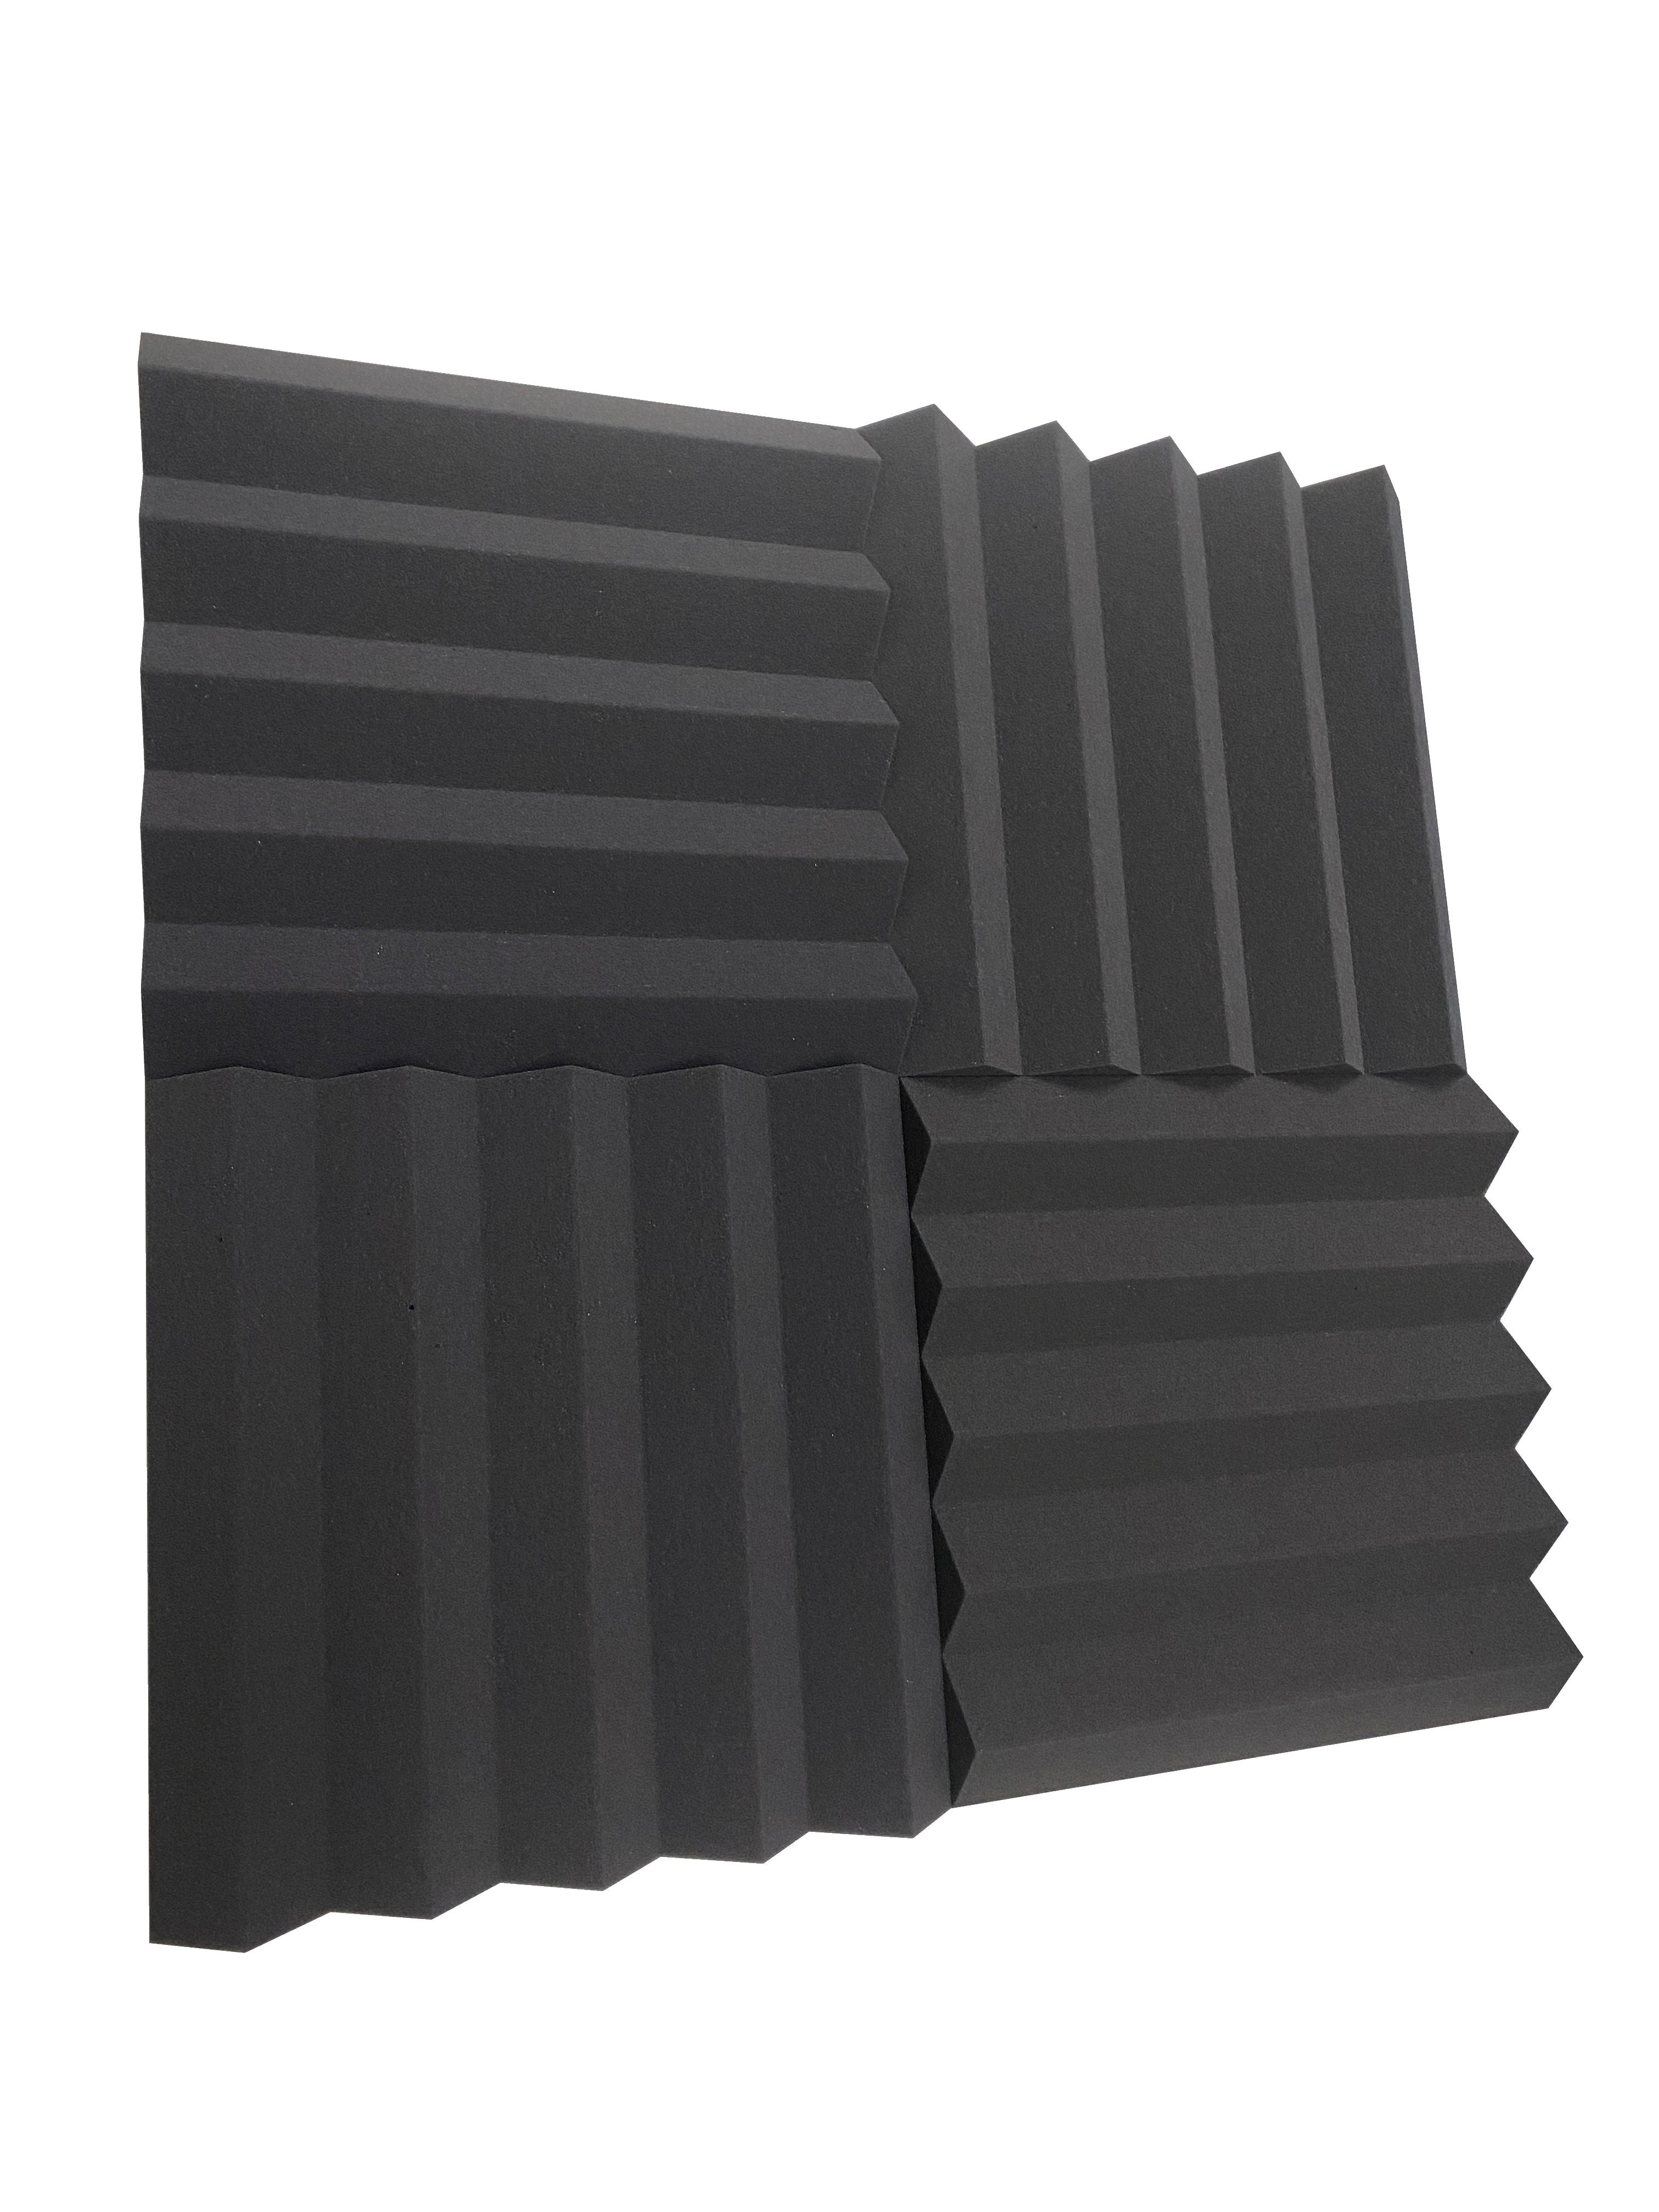 Kaufen dunkelgrau Wedge PRO 15&quot; Acoustic Studio Foam Tile Kit – 72 Fliesen, 10,44 m² Abdeckung